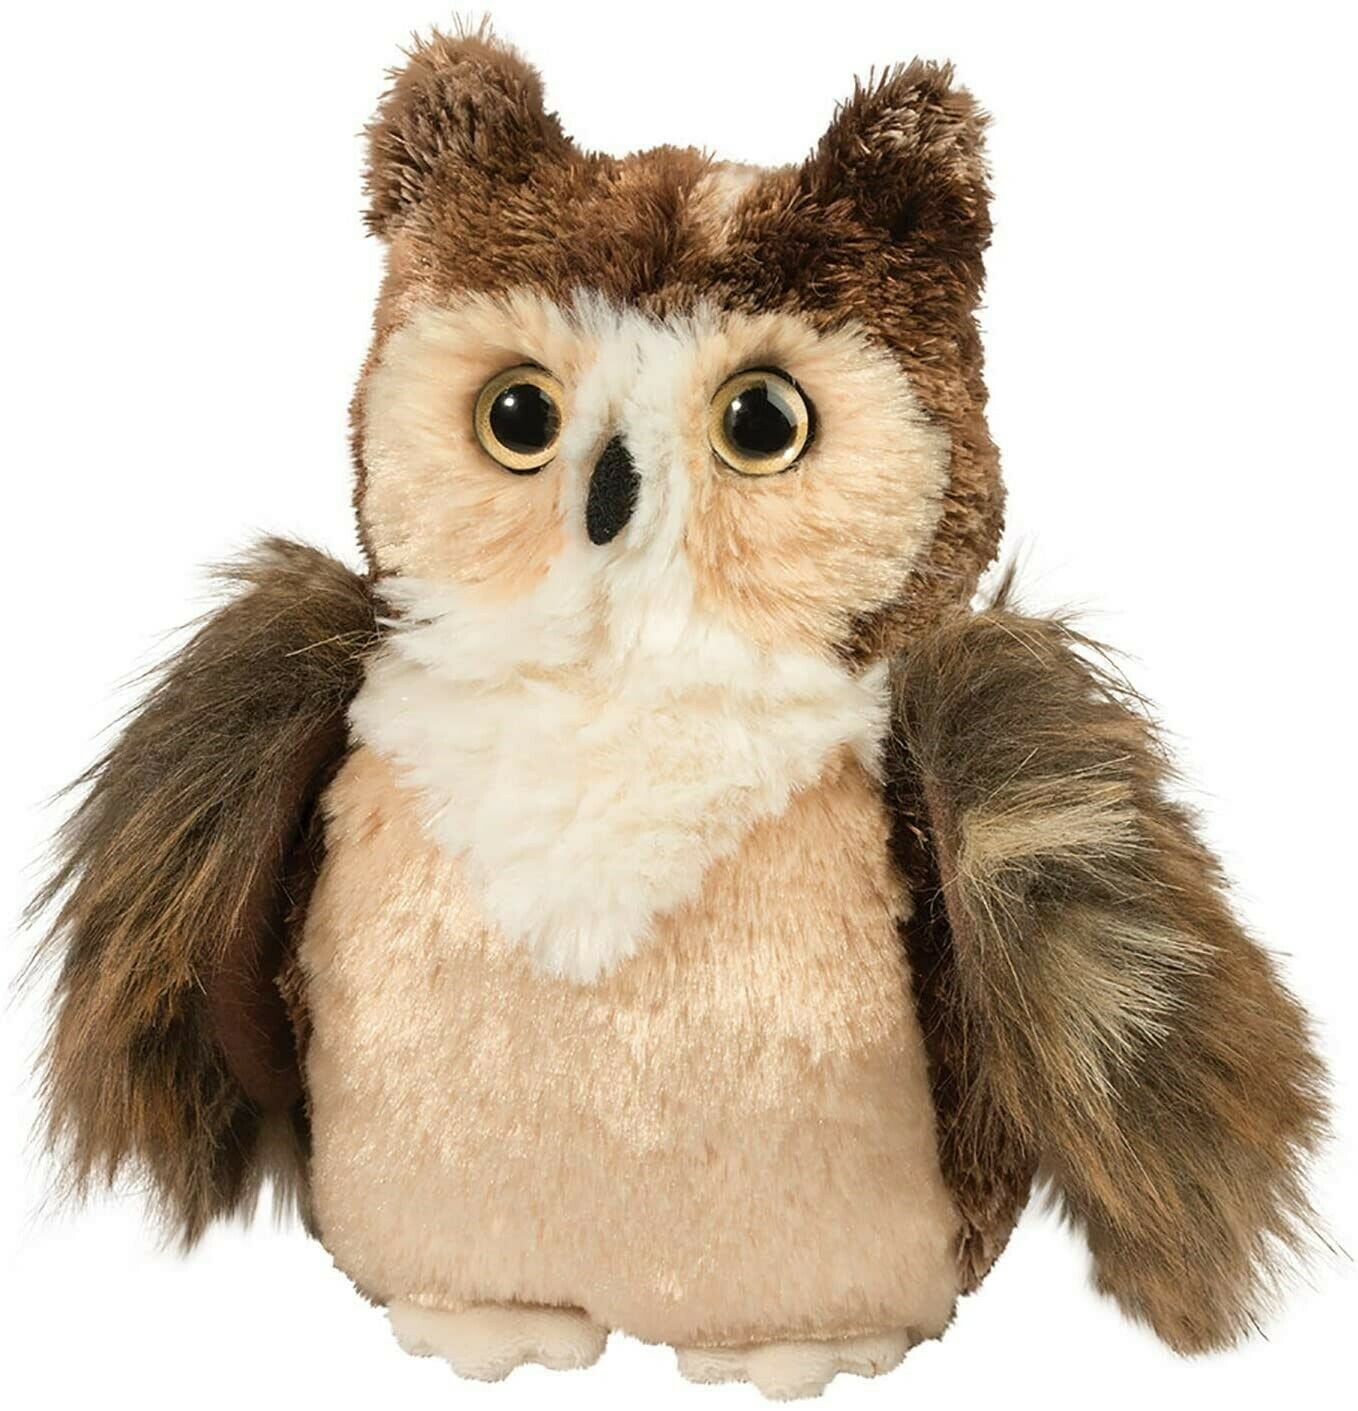 RUCKER the Plush OWL Stuffed Animal by Douglas Cuddle Toys #4060 